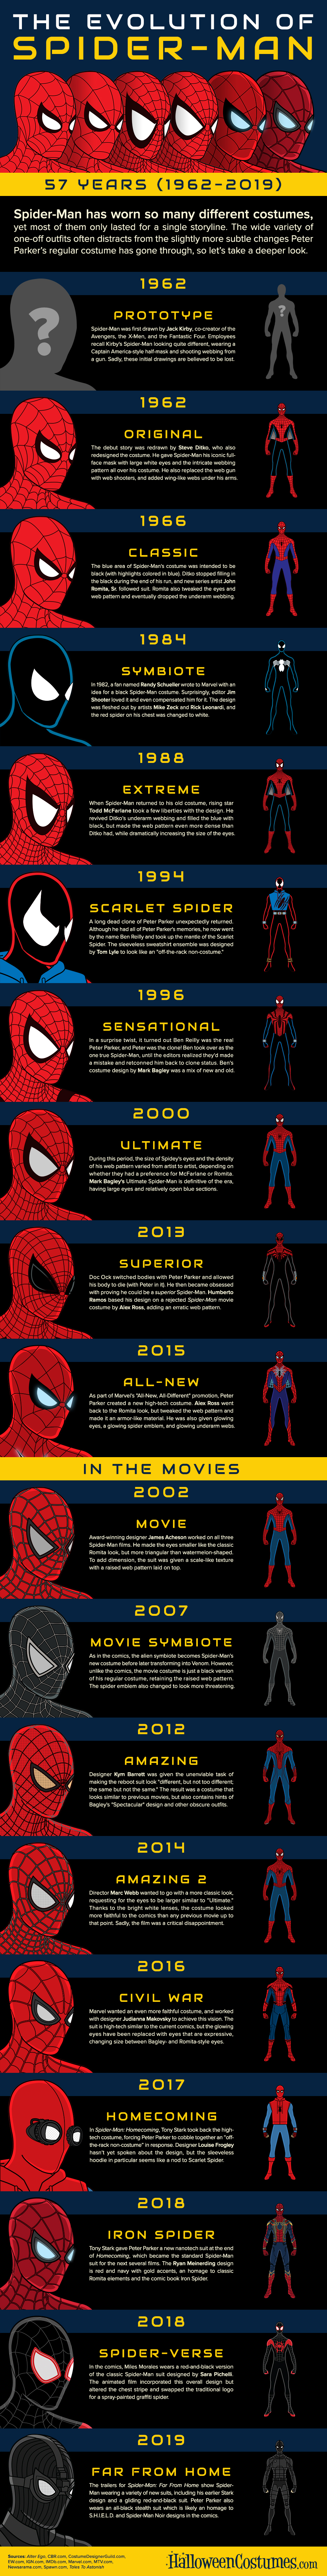 The Evolution of Spider-Man